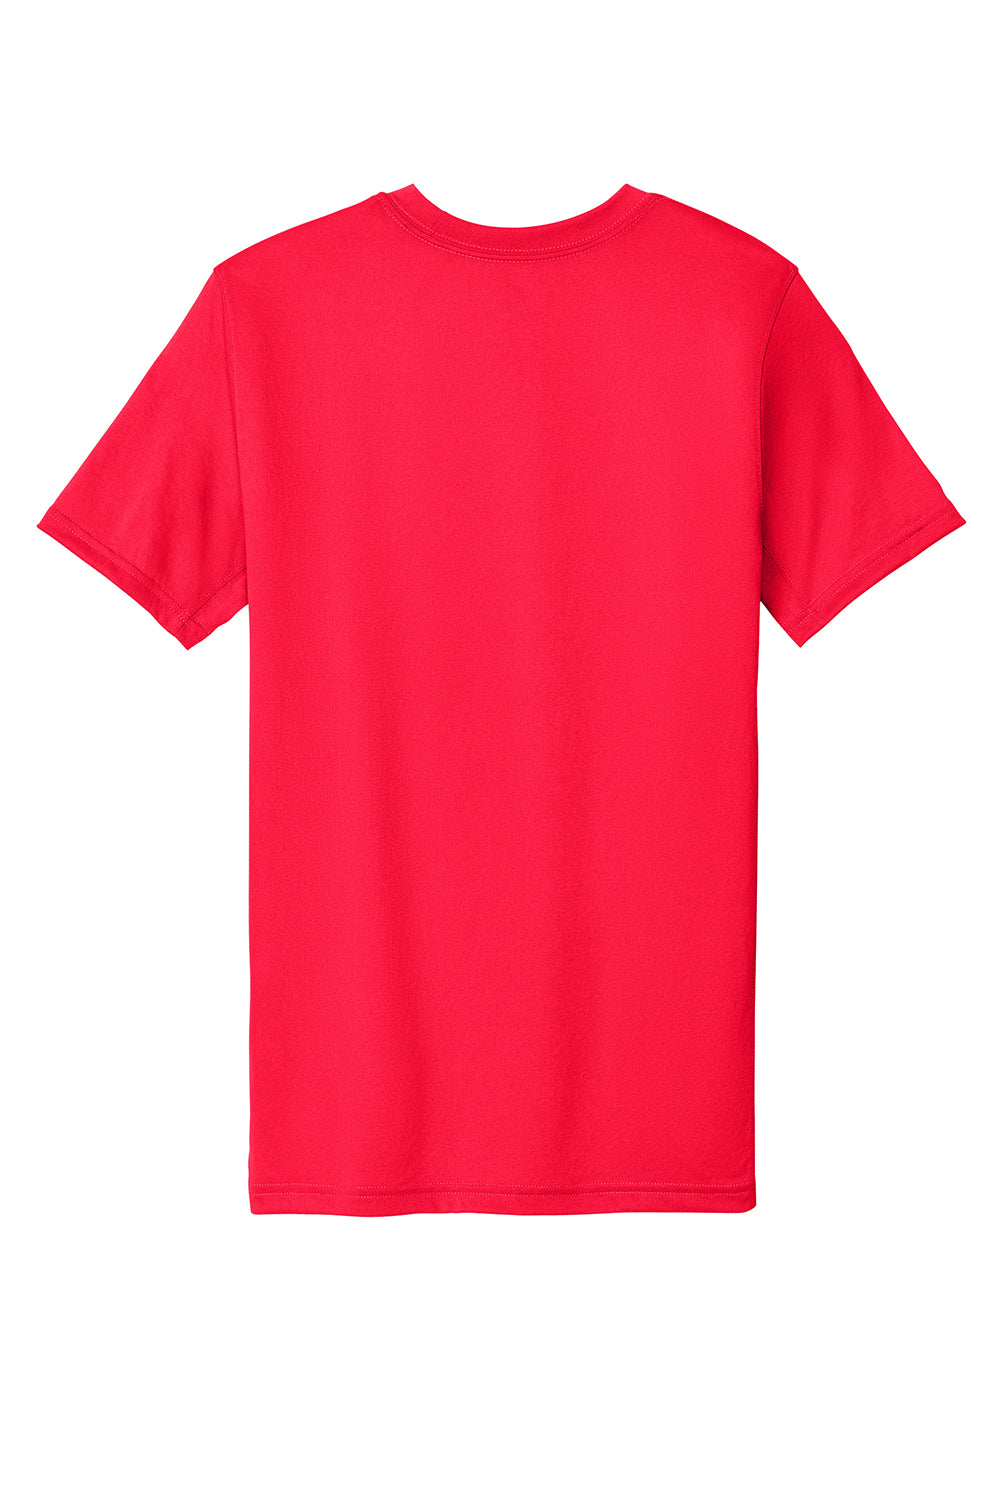 Nike NKDX8730 Mens rLegend Dri-Fit Moisture Wicking Short Sleeve Crewneck T-Shirt University Red Flat Back